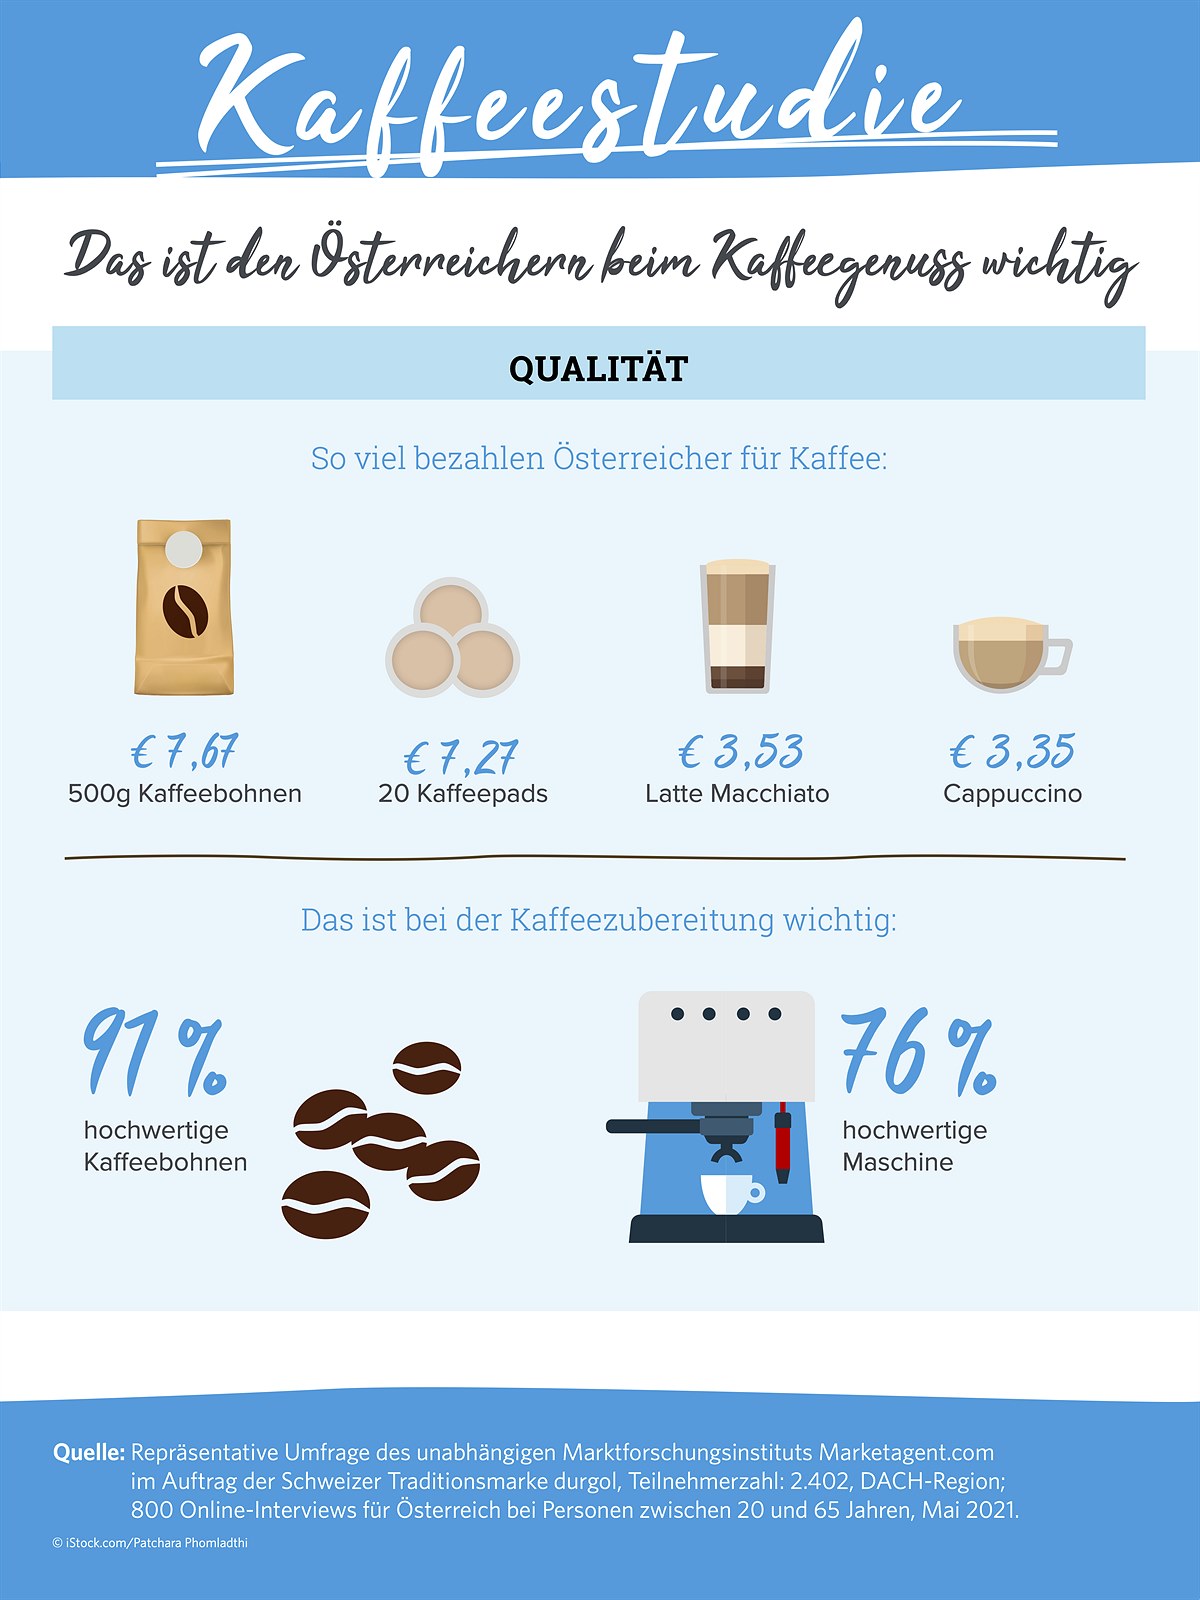 durgol Kaffeestudie 2021 Infografik Qualität